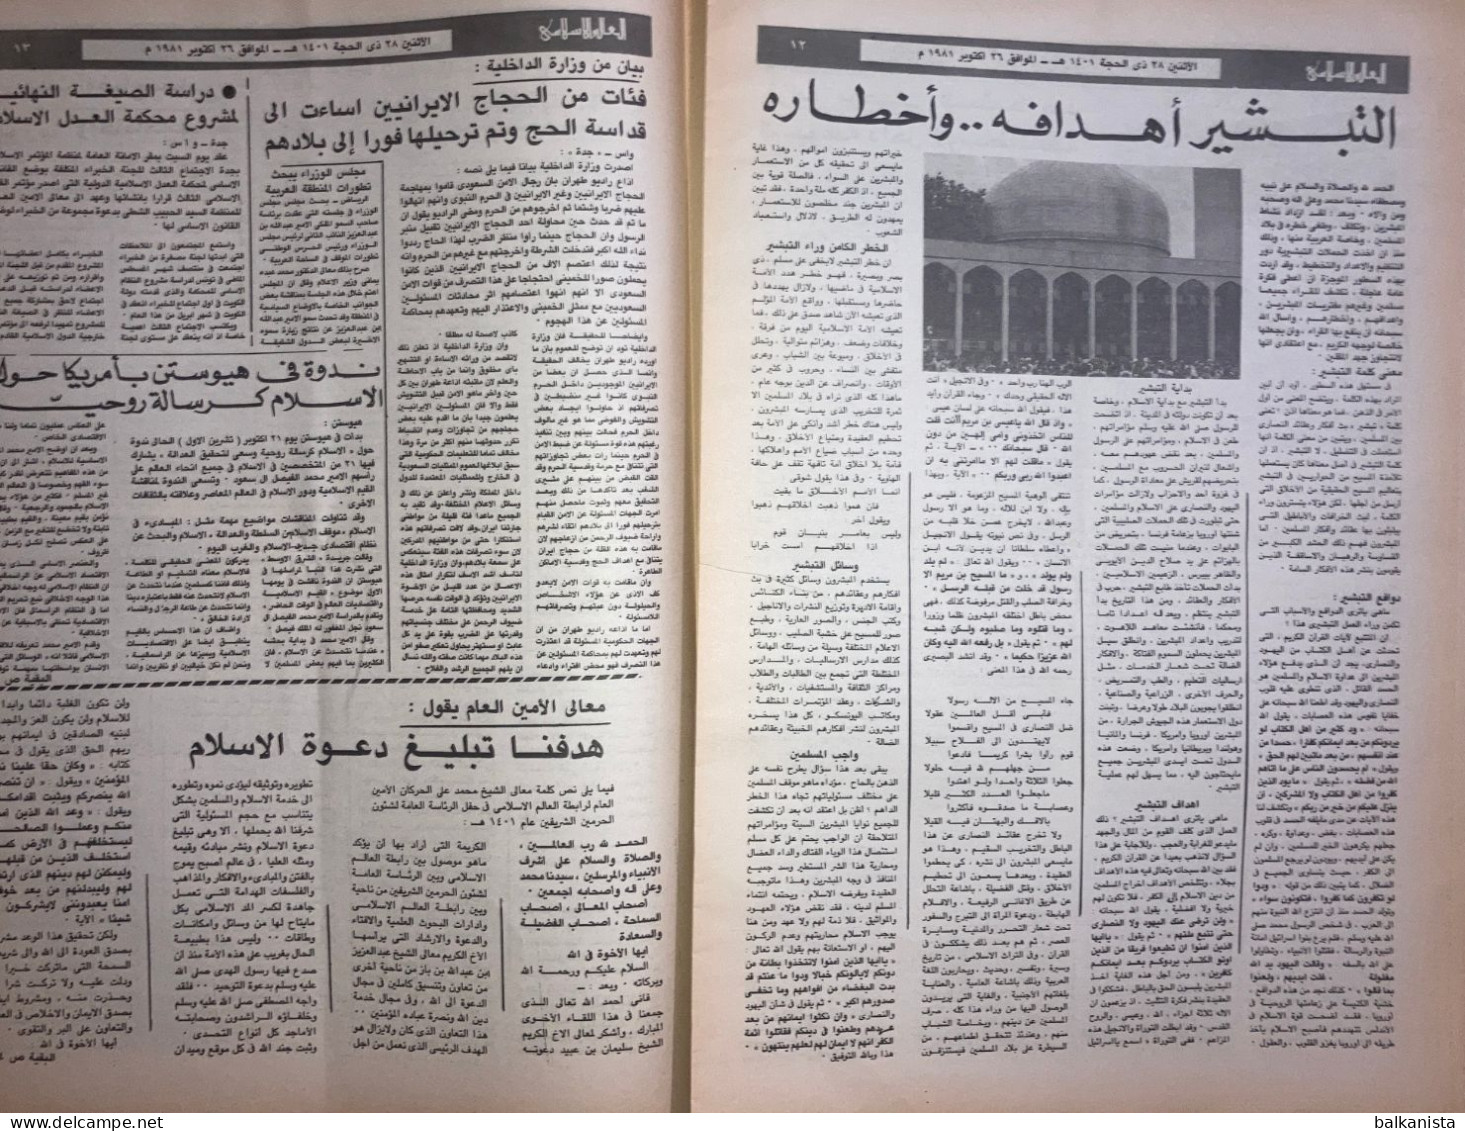 Saudi Arabia Akhbar al-Alam al-Islami Newspaper 26 October 1981